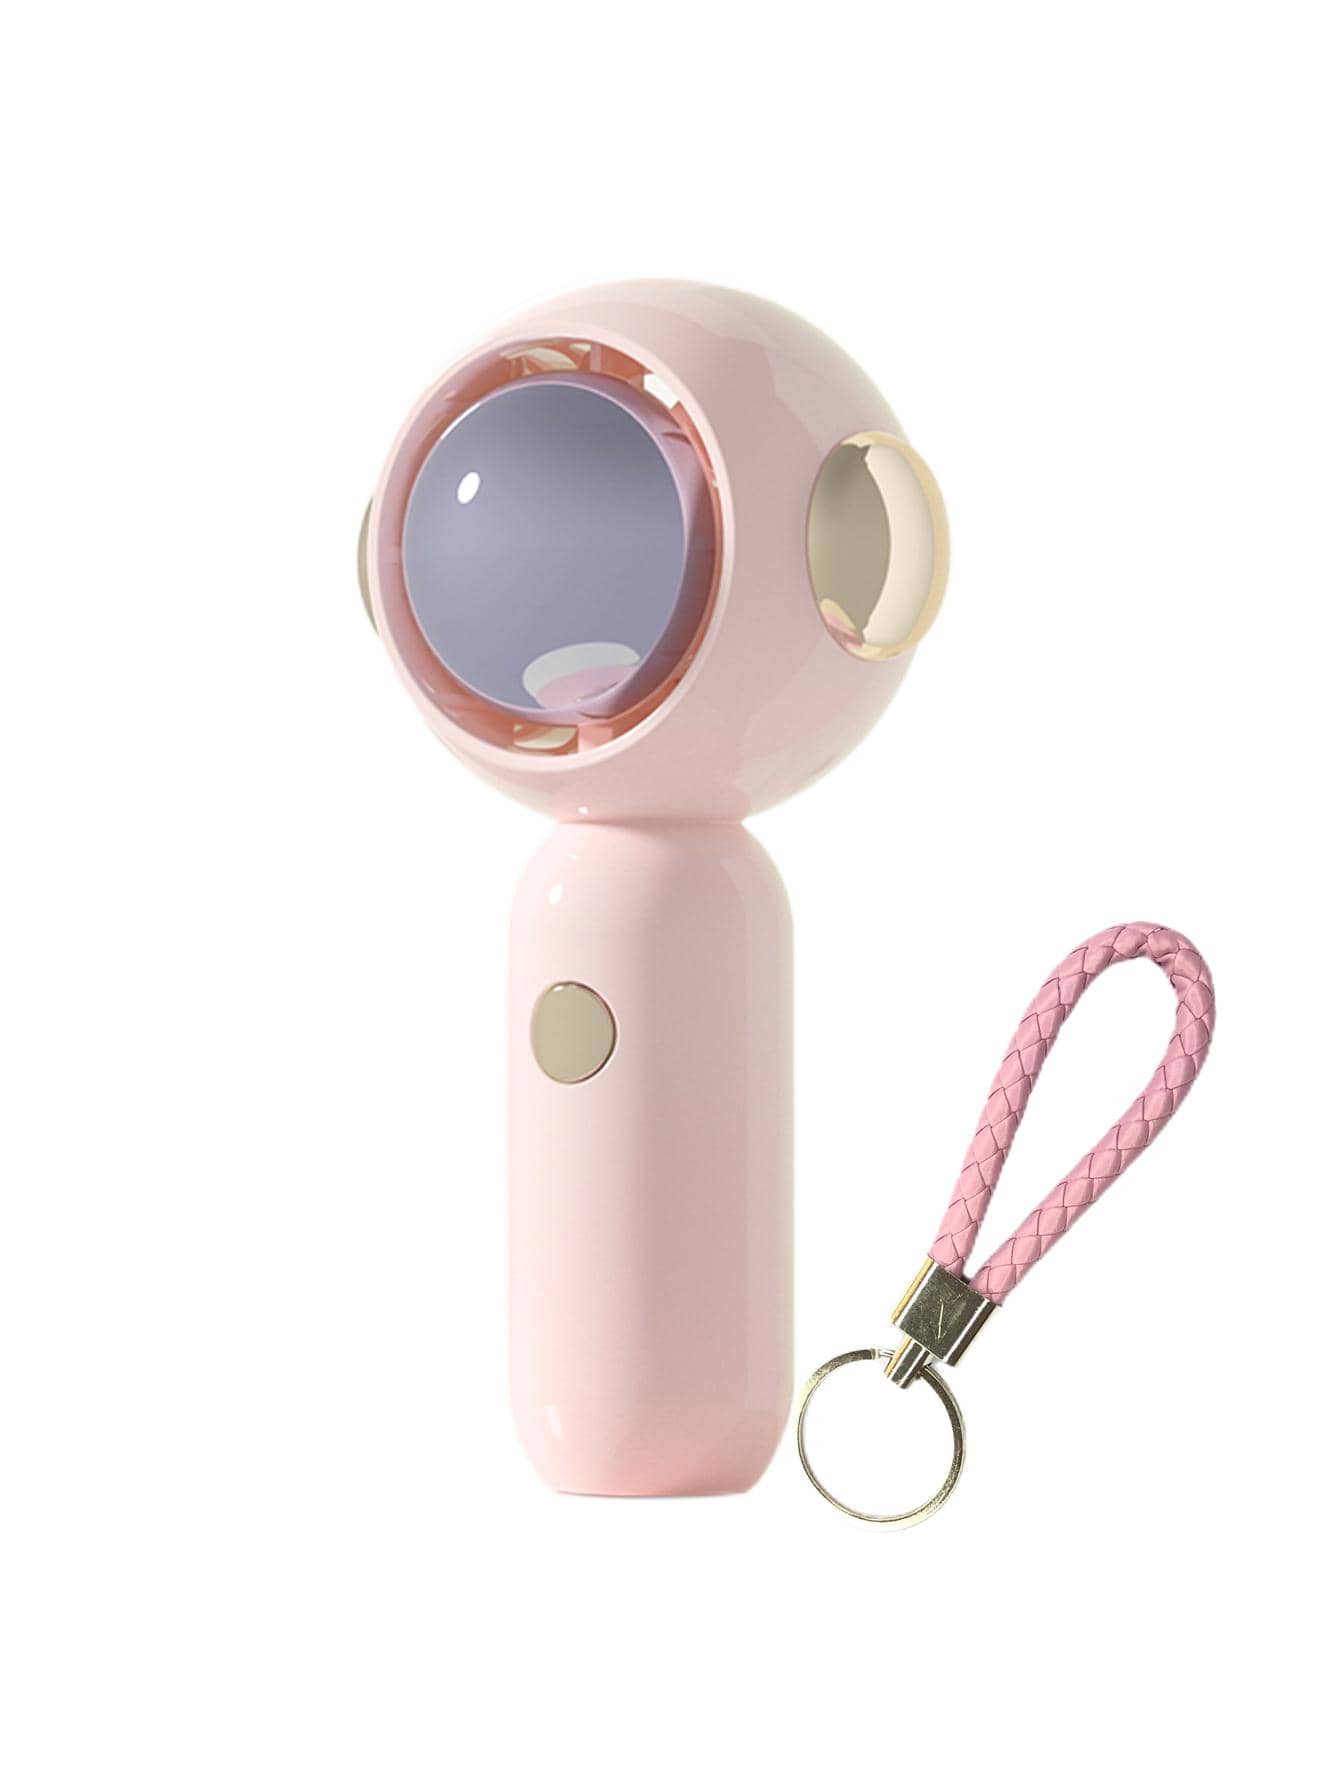 1pc ABS Mini Fan, Creative Pink Astronaut Design Handheld Fan For Summer